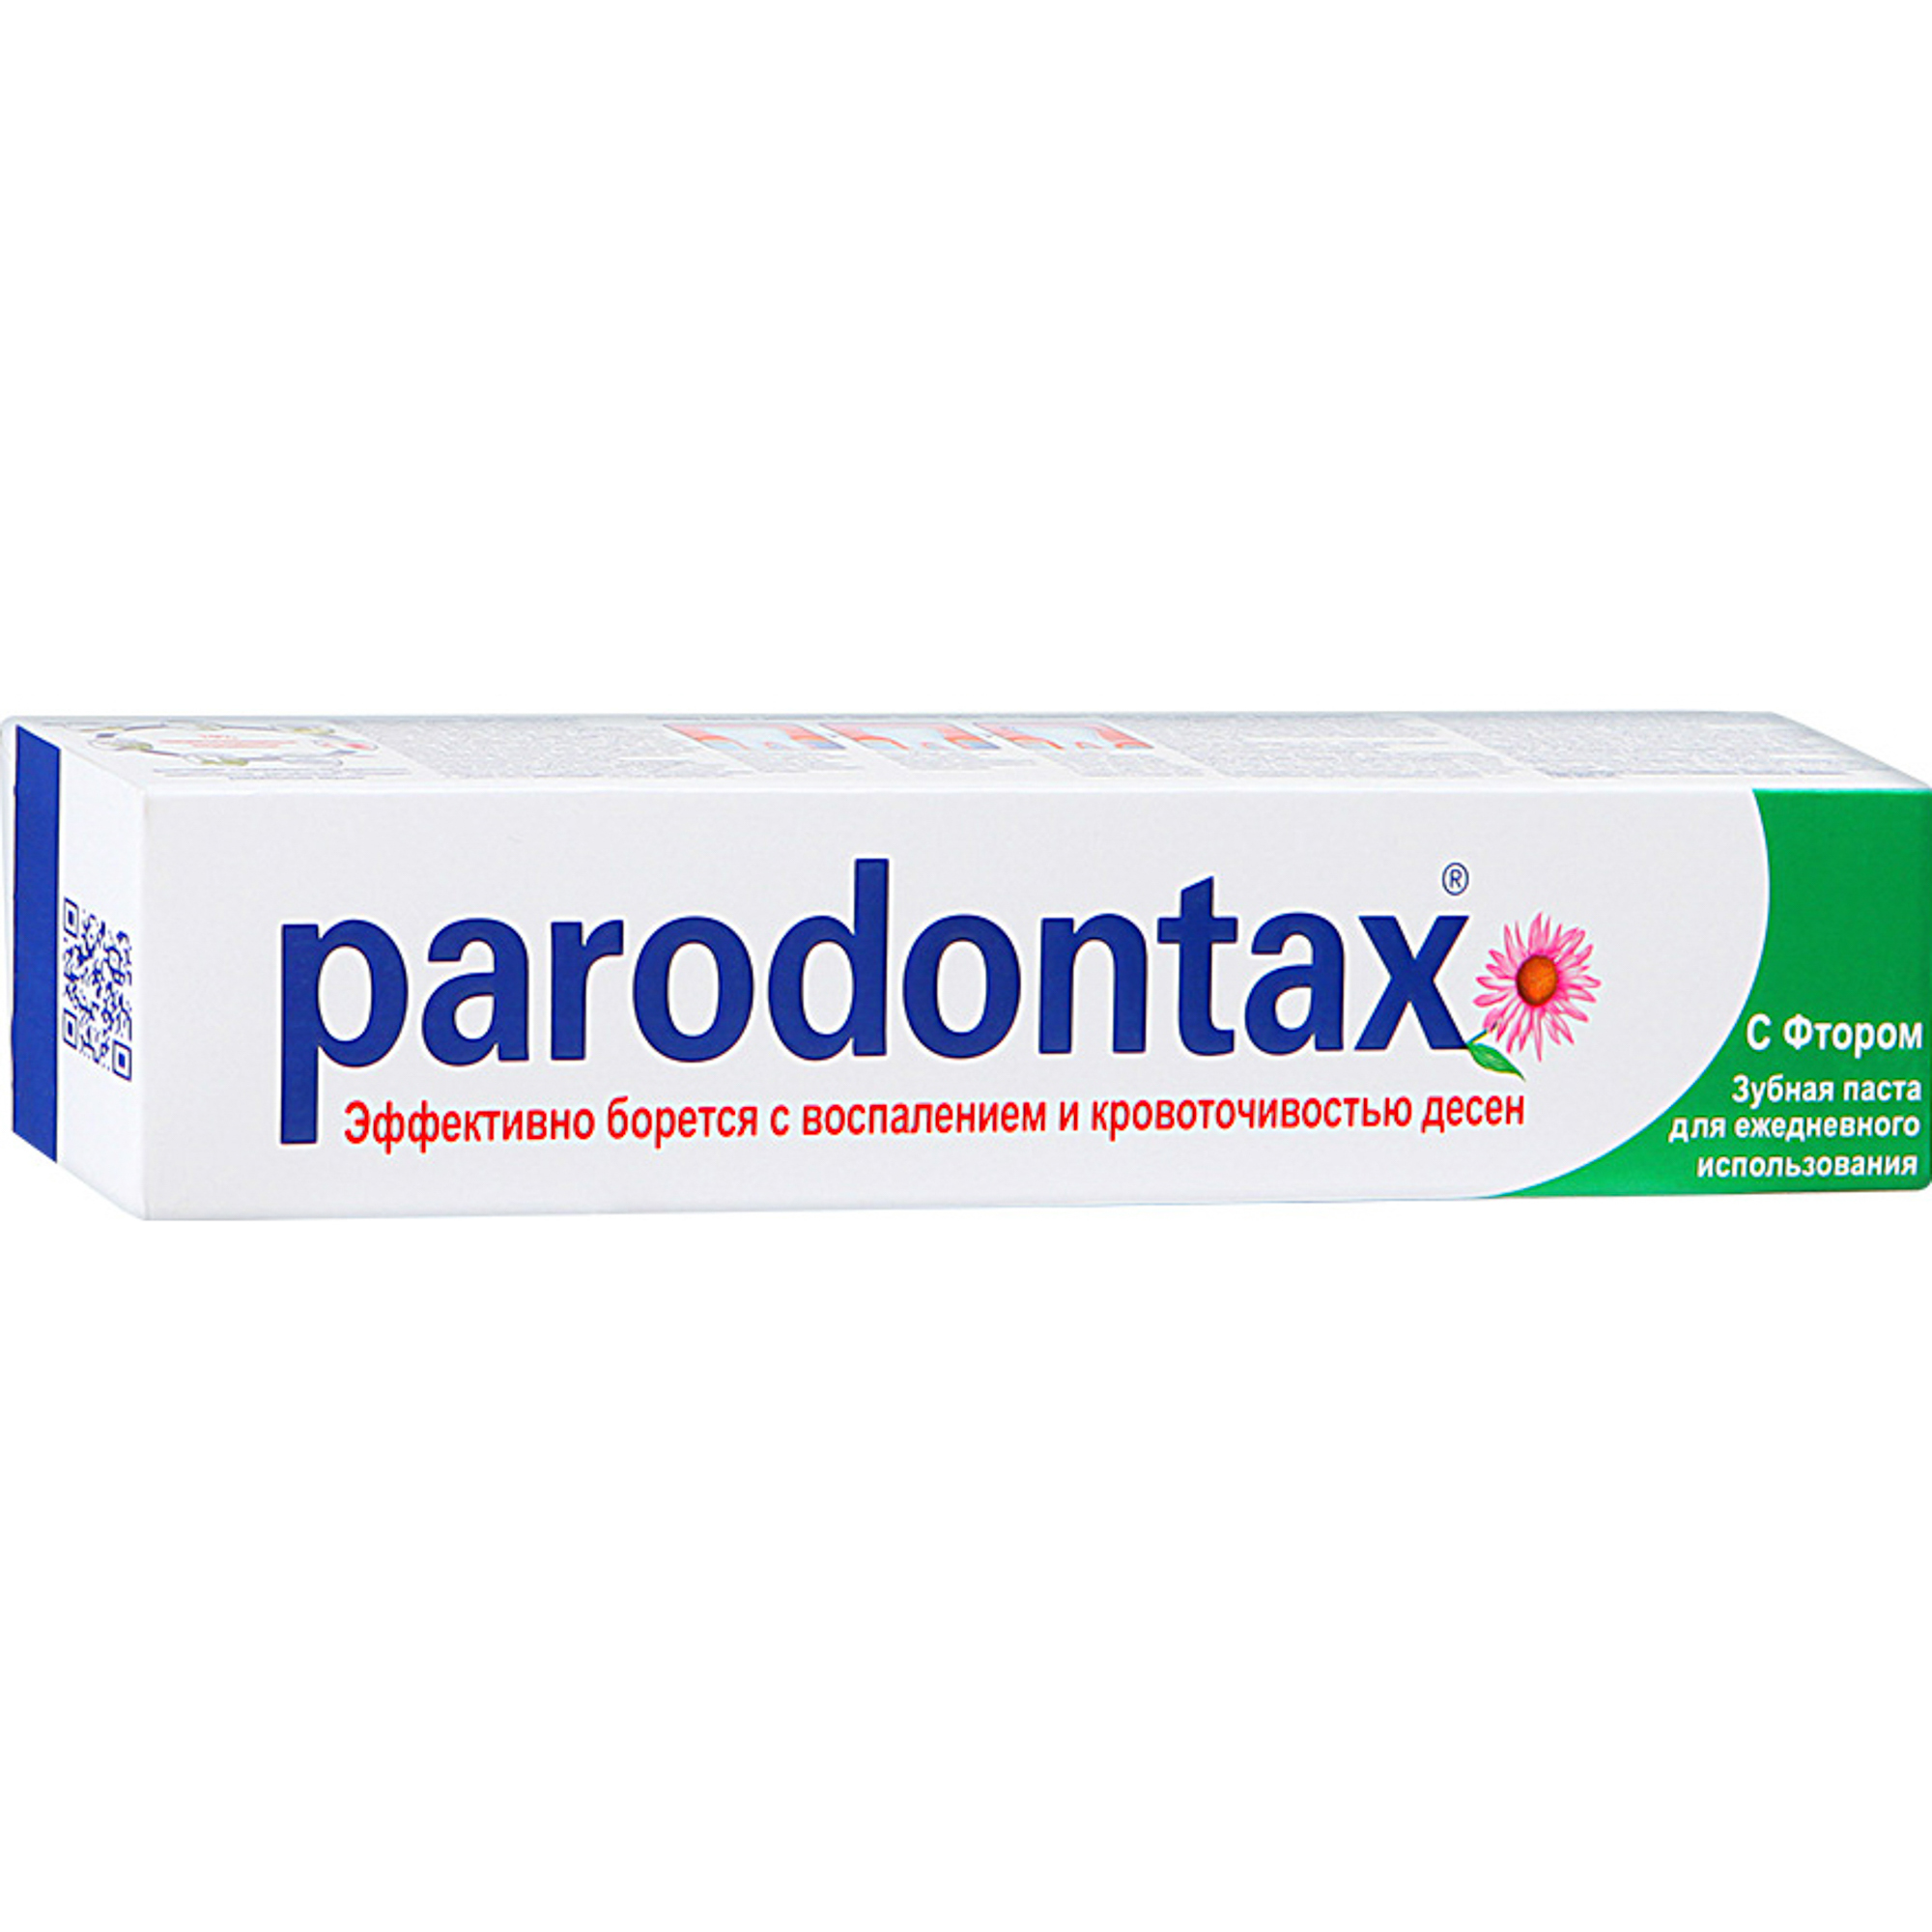 Зубная паста Parodontax С фтором 50 мл зубная паста parodontax с фтором 50 мл